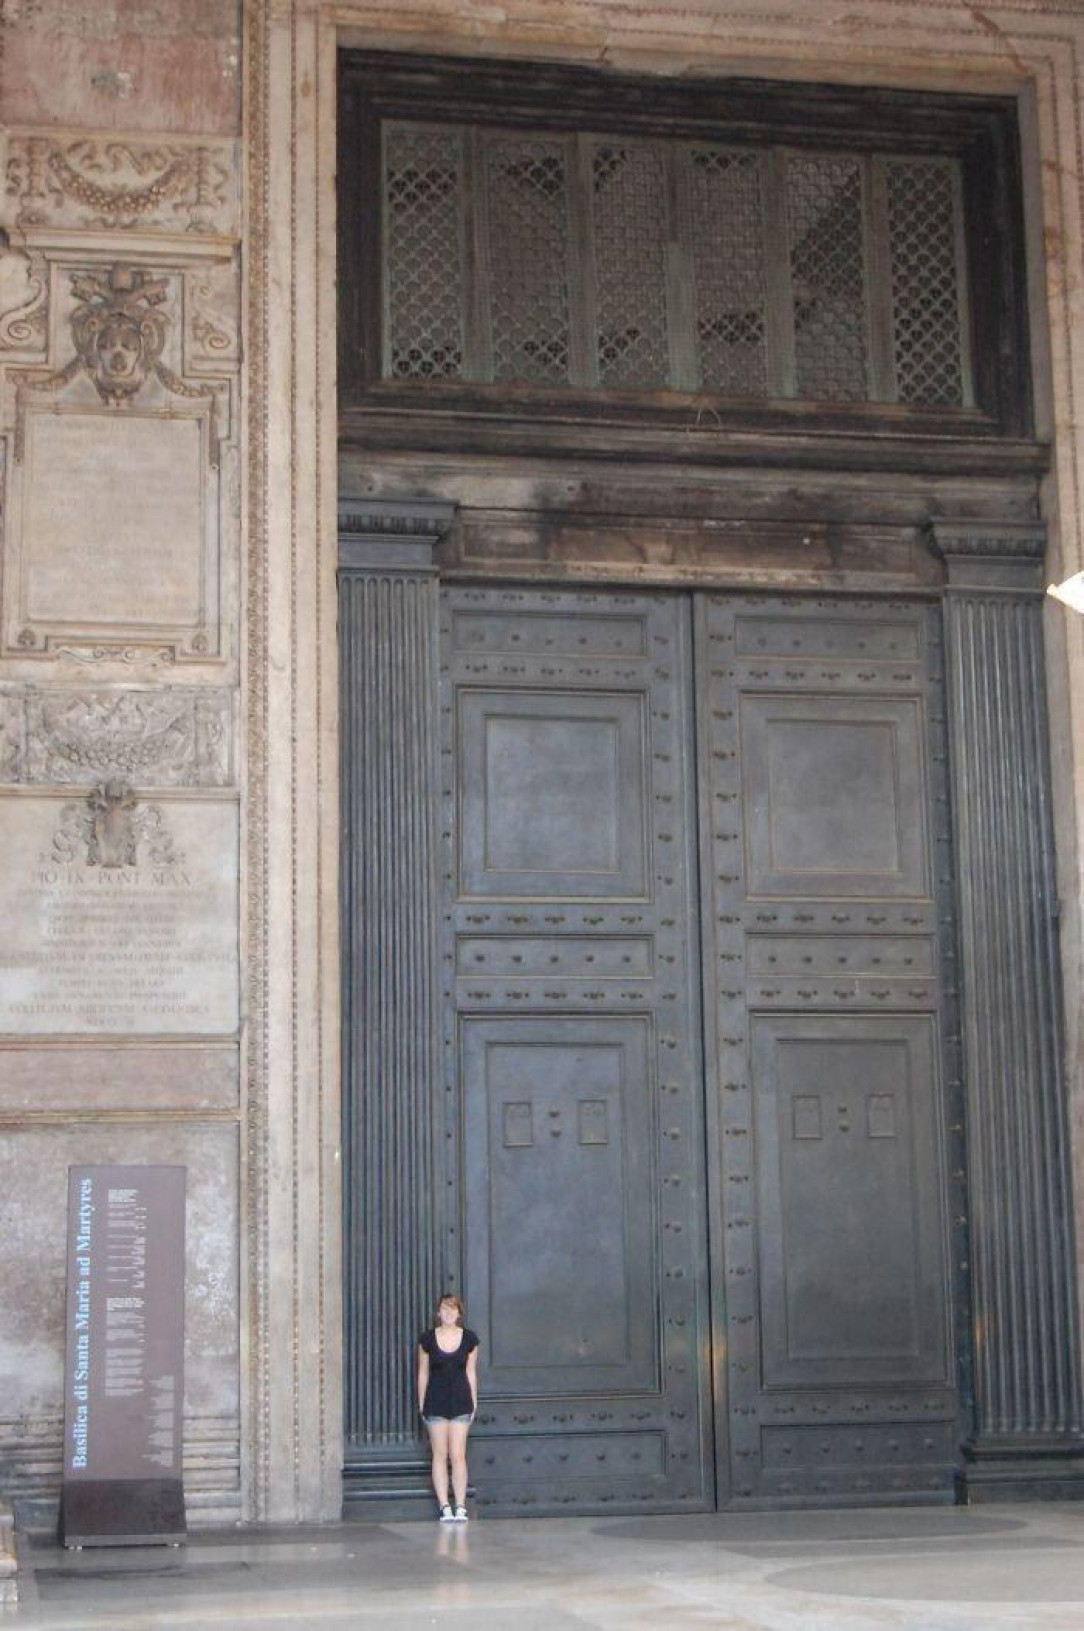 The oldest doors in Rome